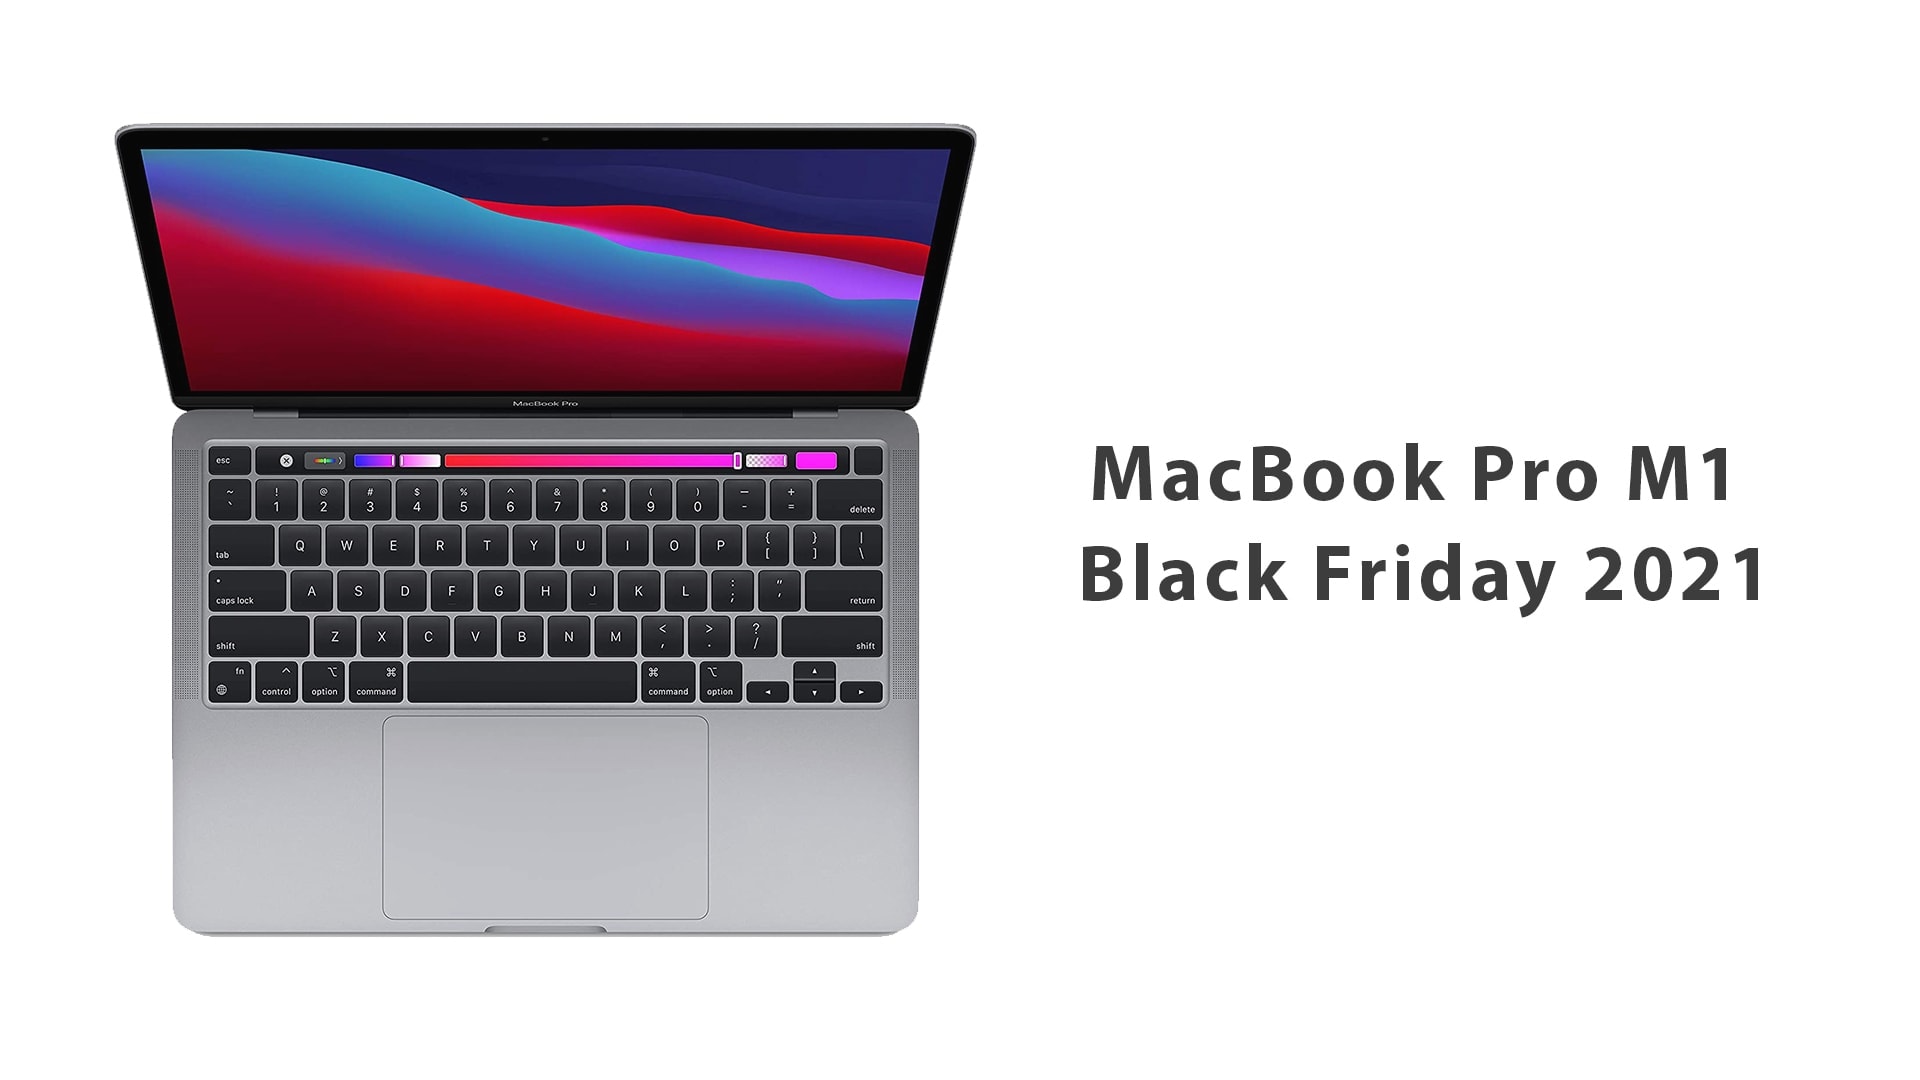 MacBook Pro M1 Black Friday 2021